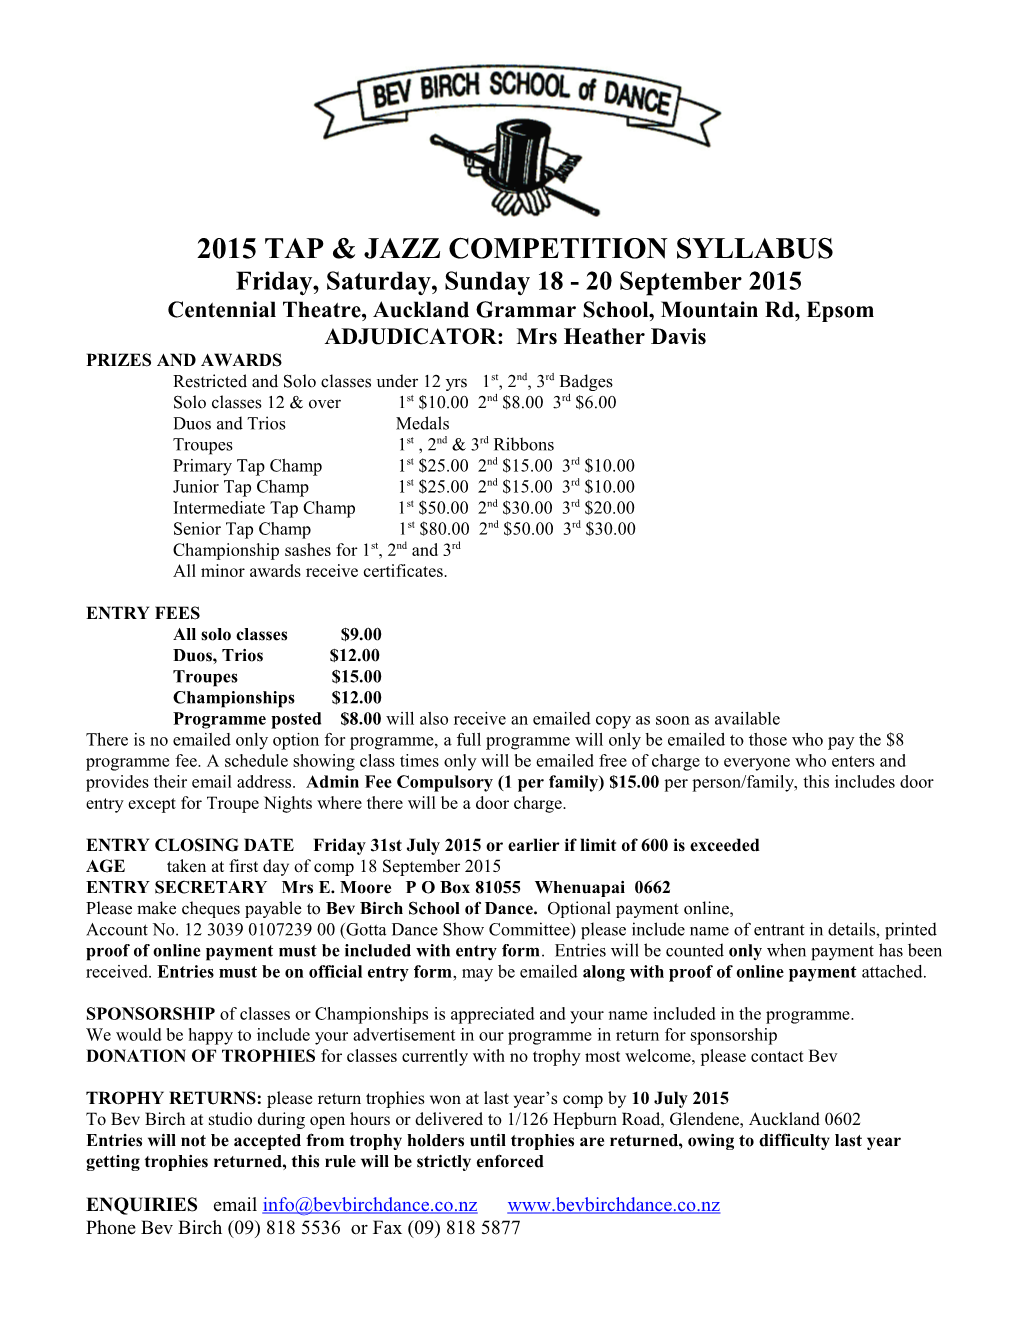 2015 Tap & Jazz Competition Syllabus